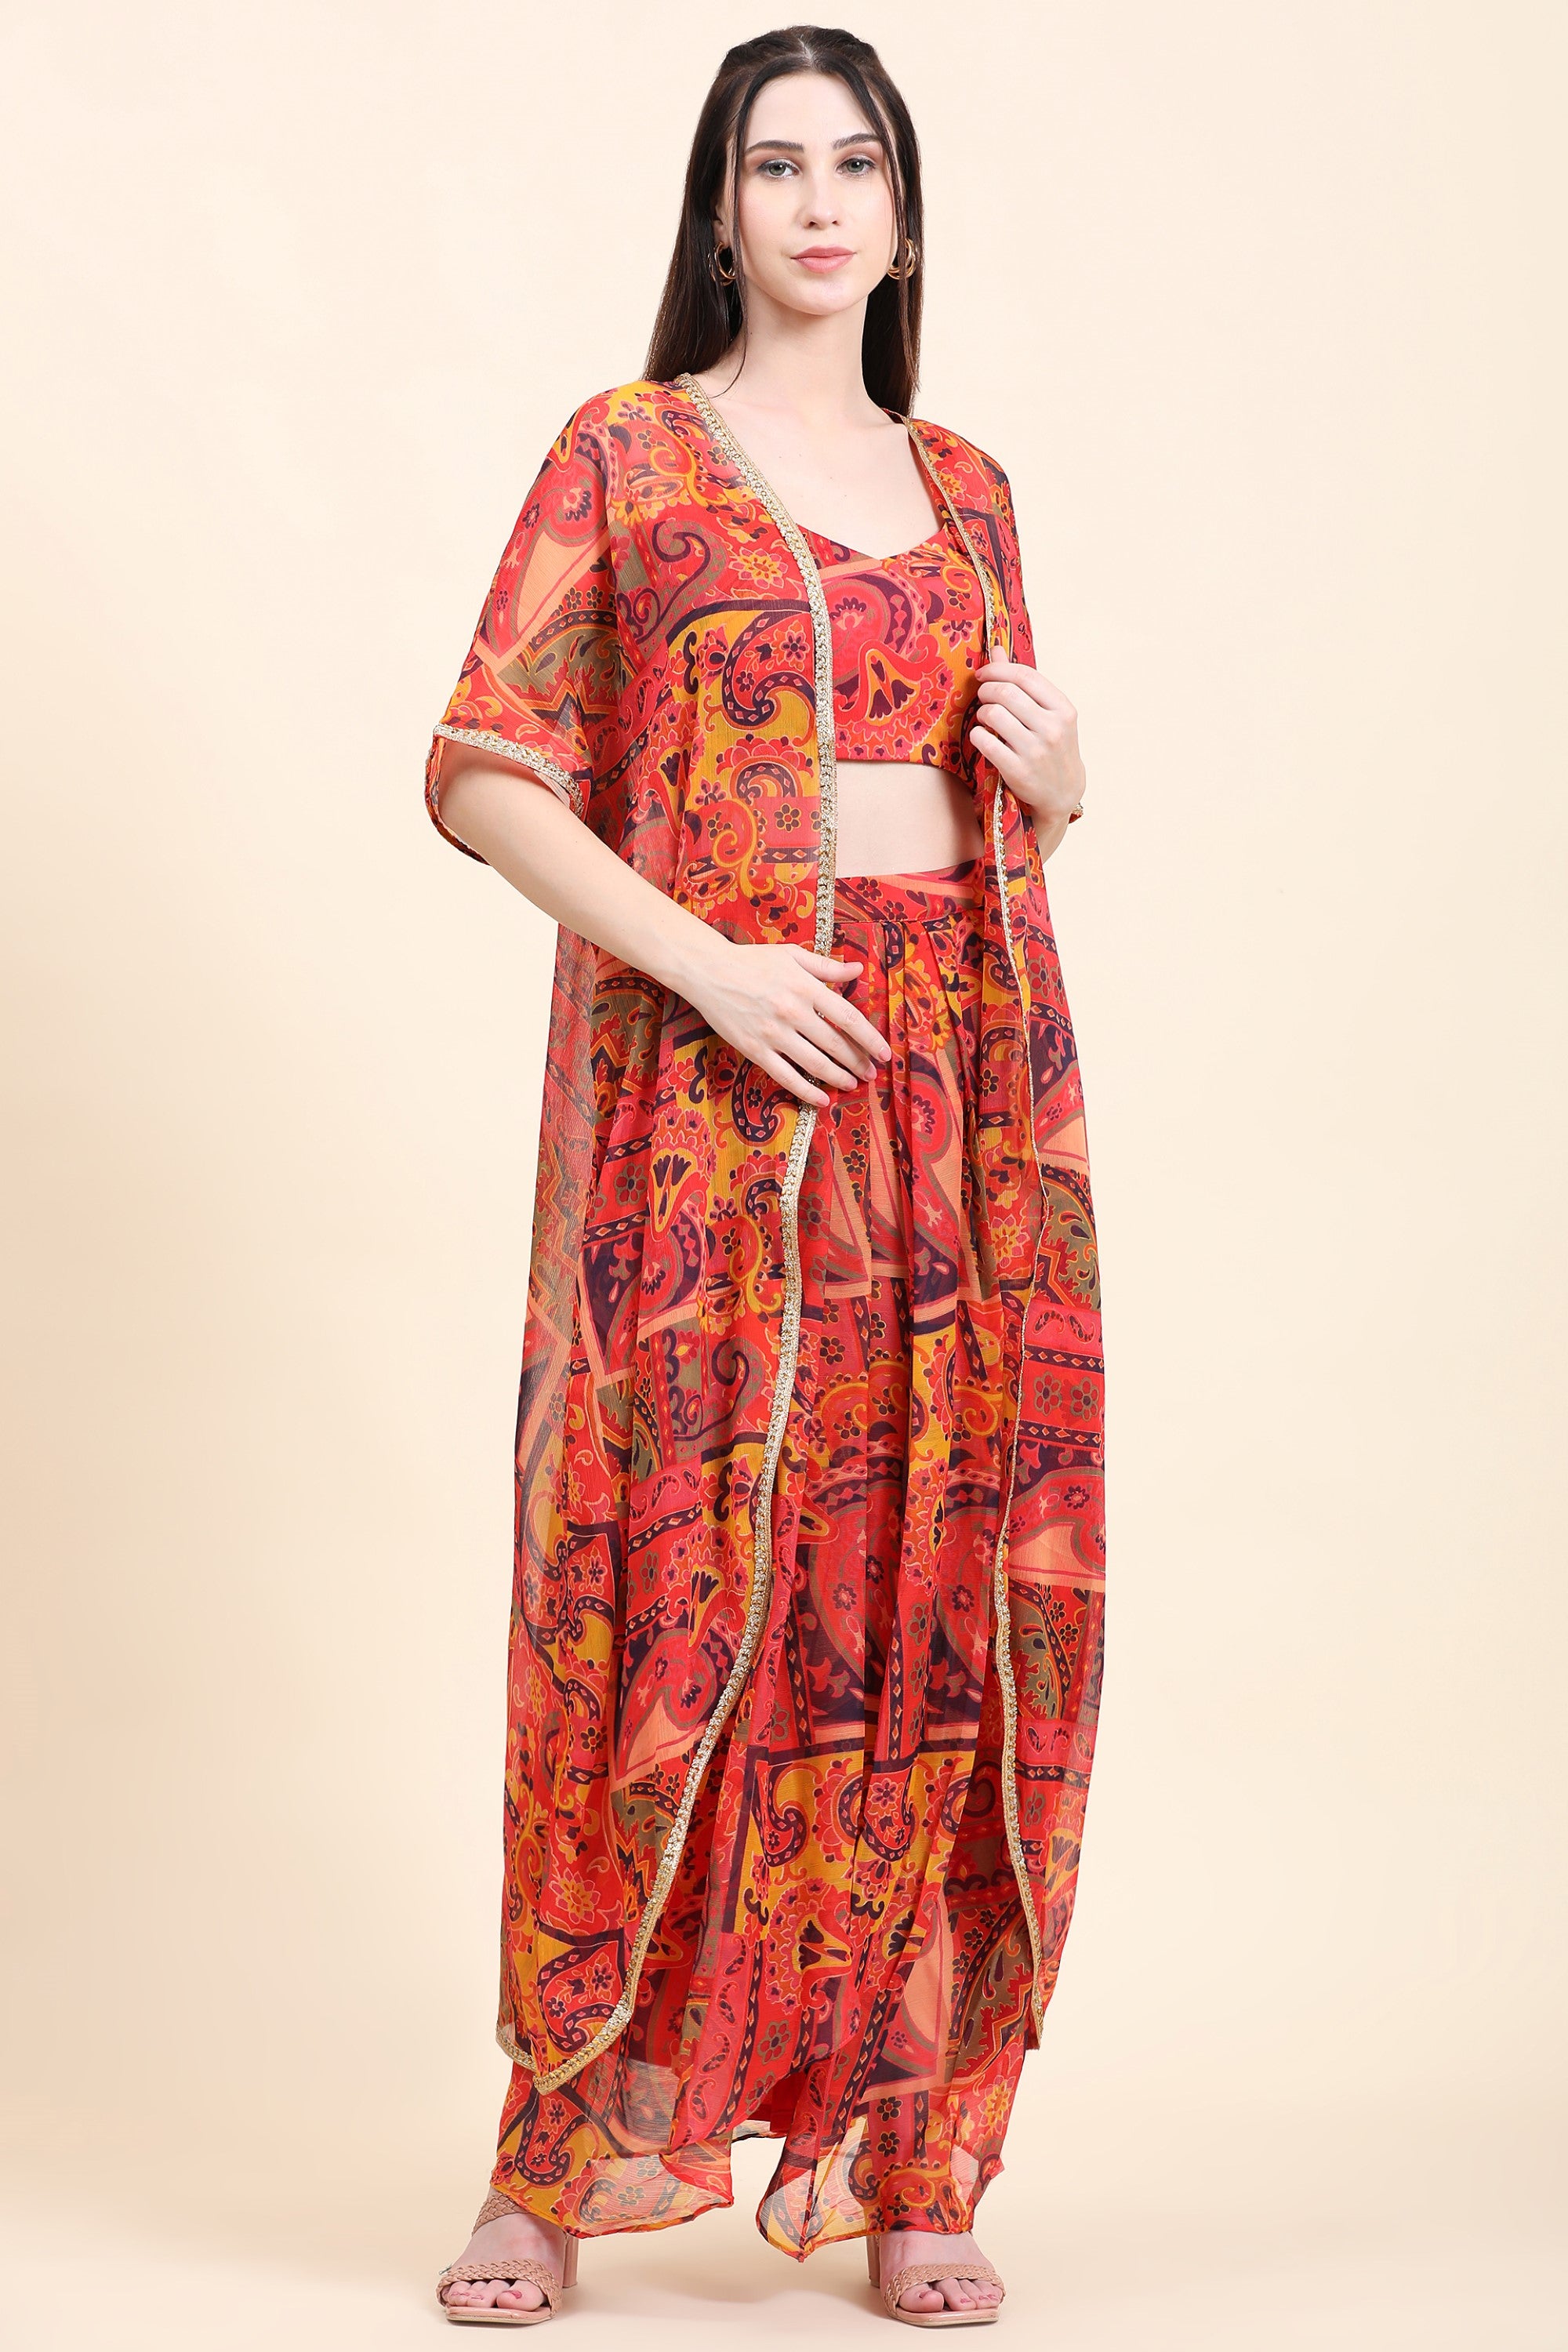 Women's Red base Multicolor print Chiffon Blouse, Cape, Dhoti drape Skirt set - MIRACOLOS by Ruchi